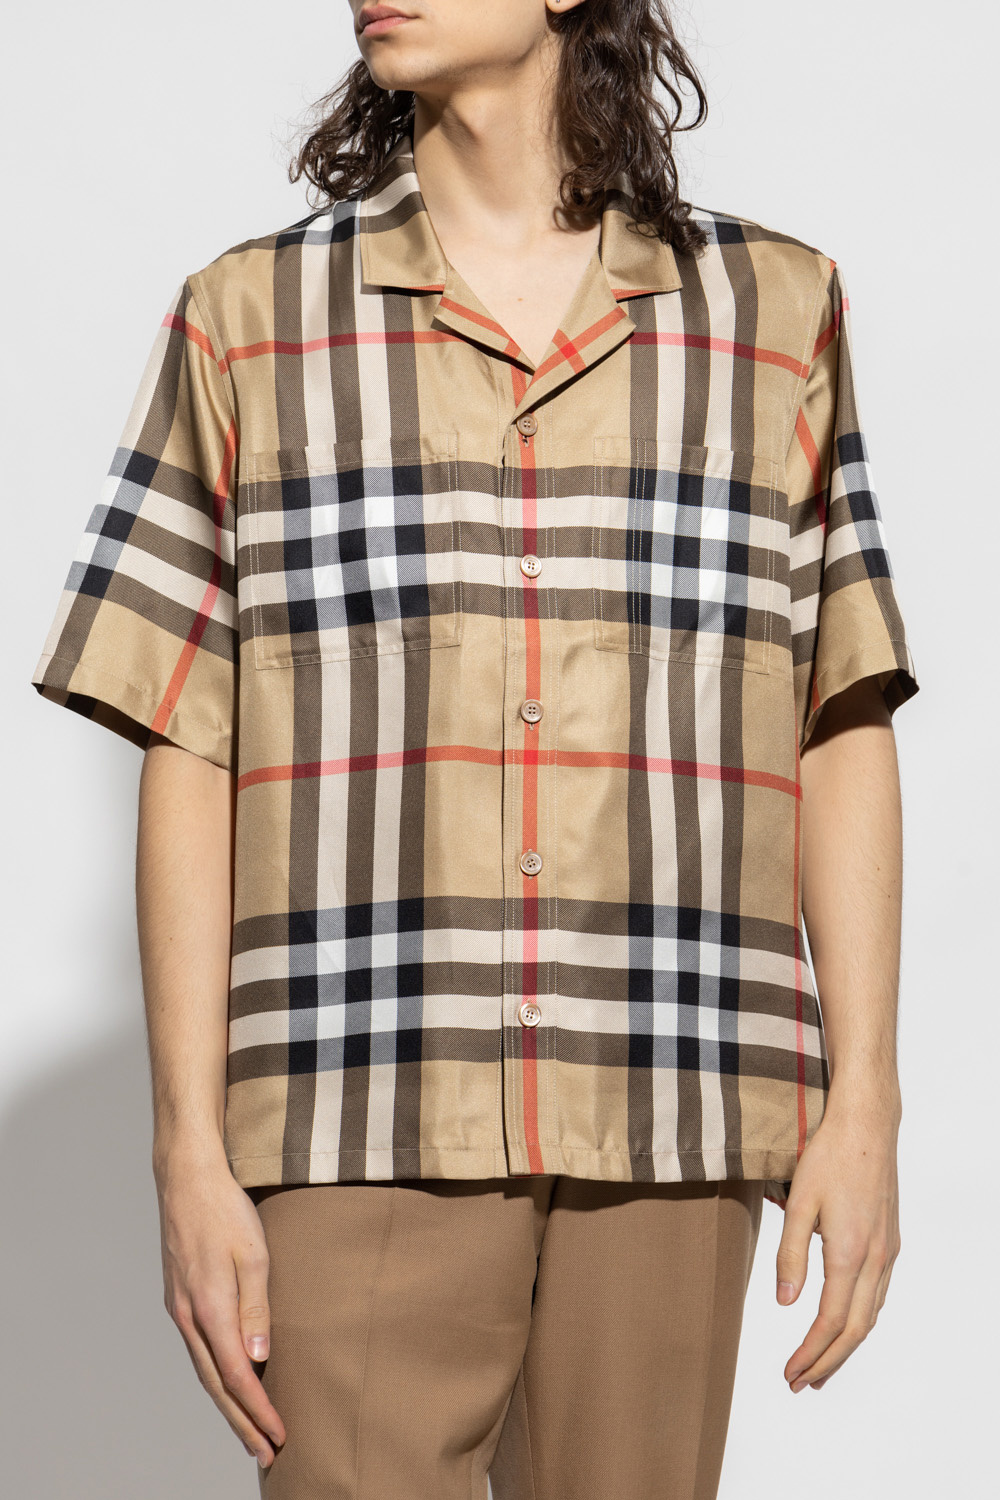 burberry jacquard-woven ‘Reepham’ silk shirt